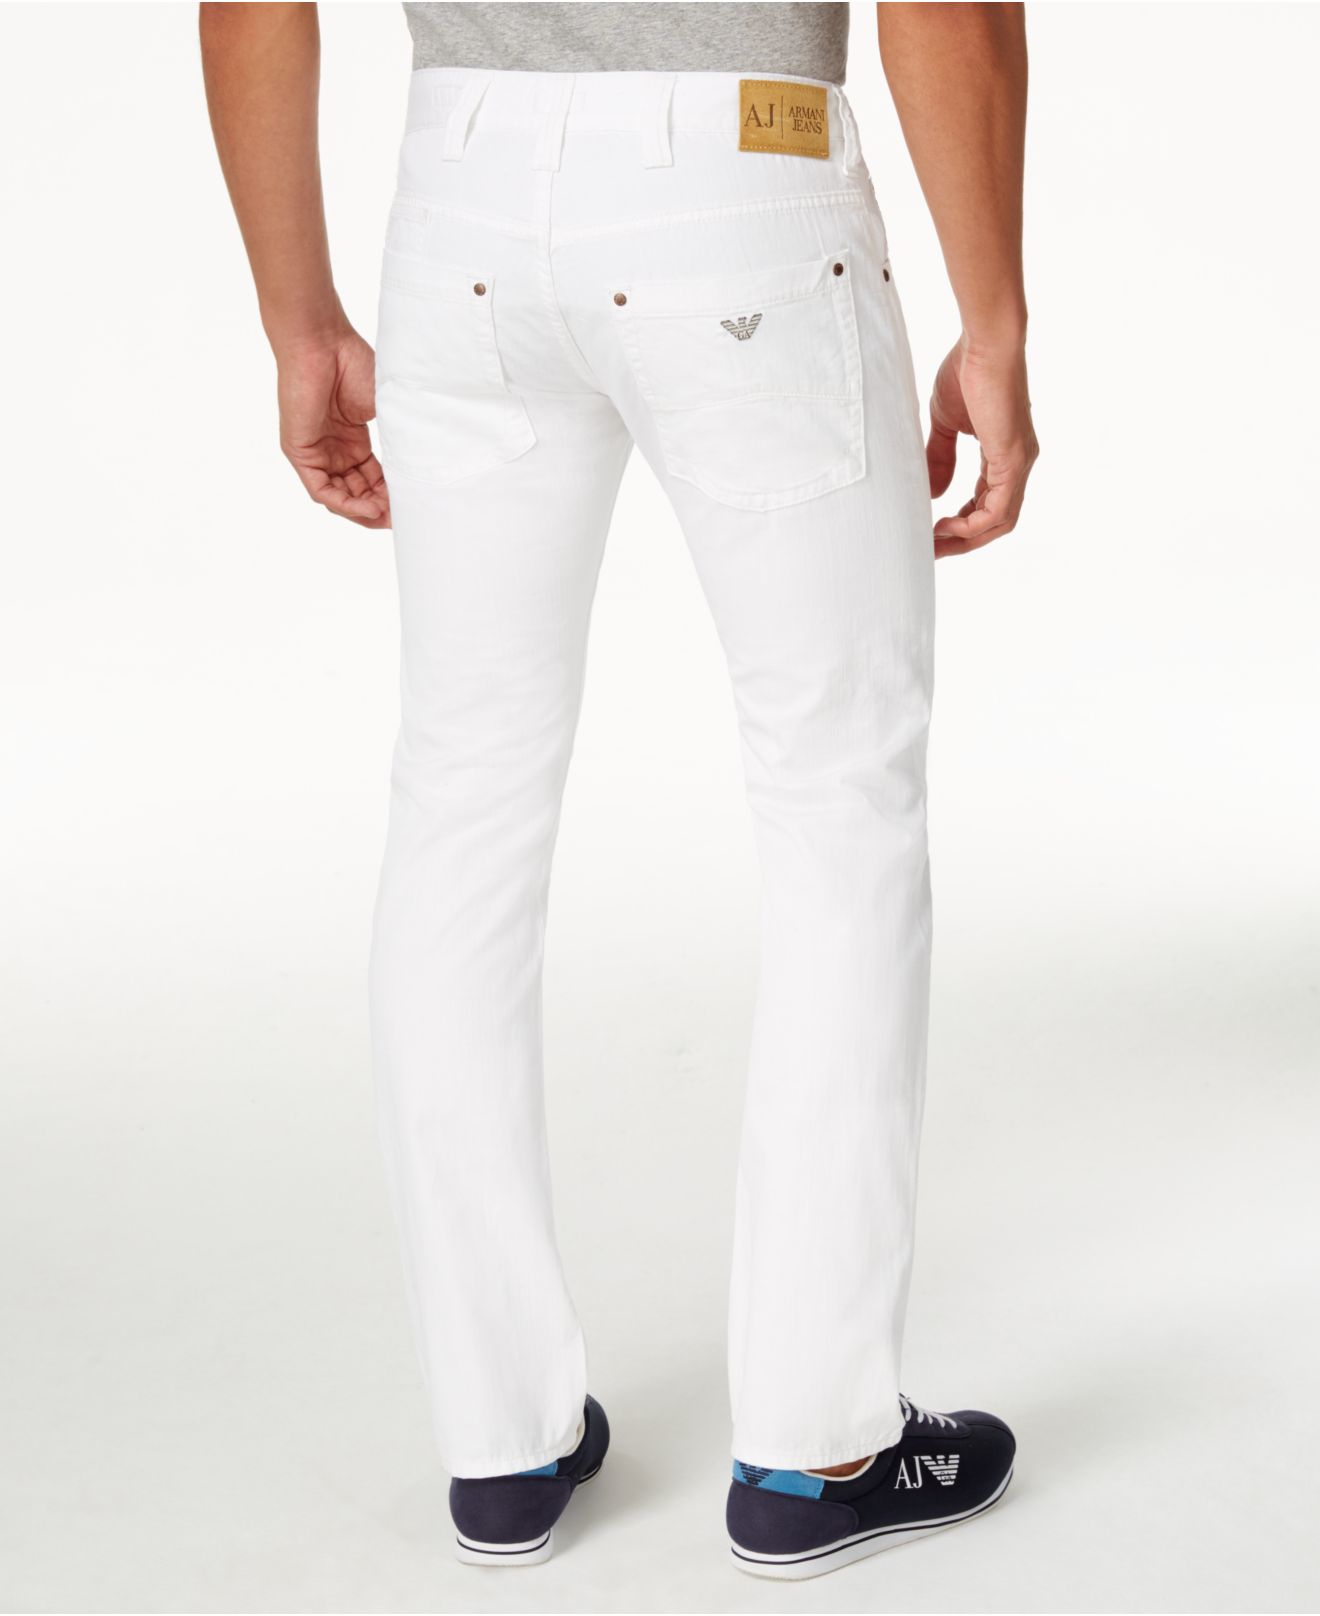 Lyst - Armani Jeans Men's Slim-fit Jeans in White for Men